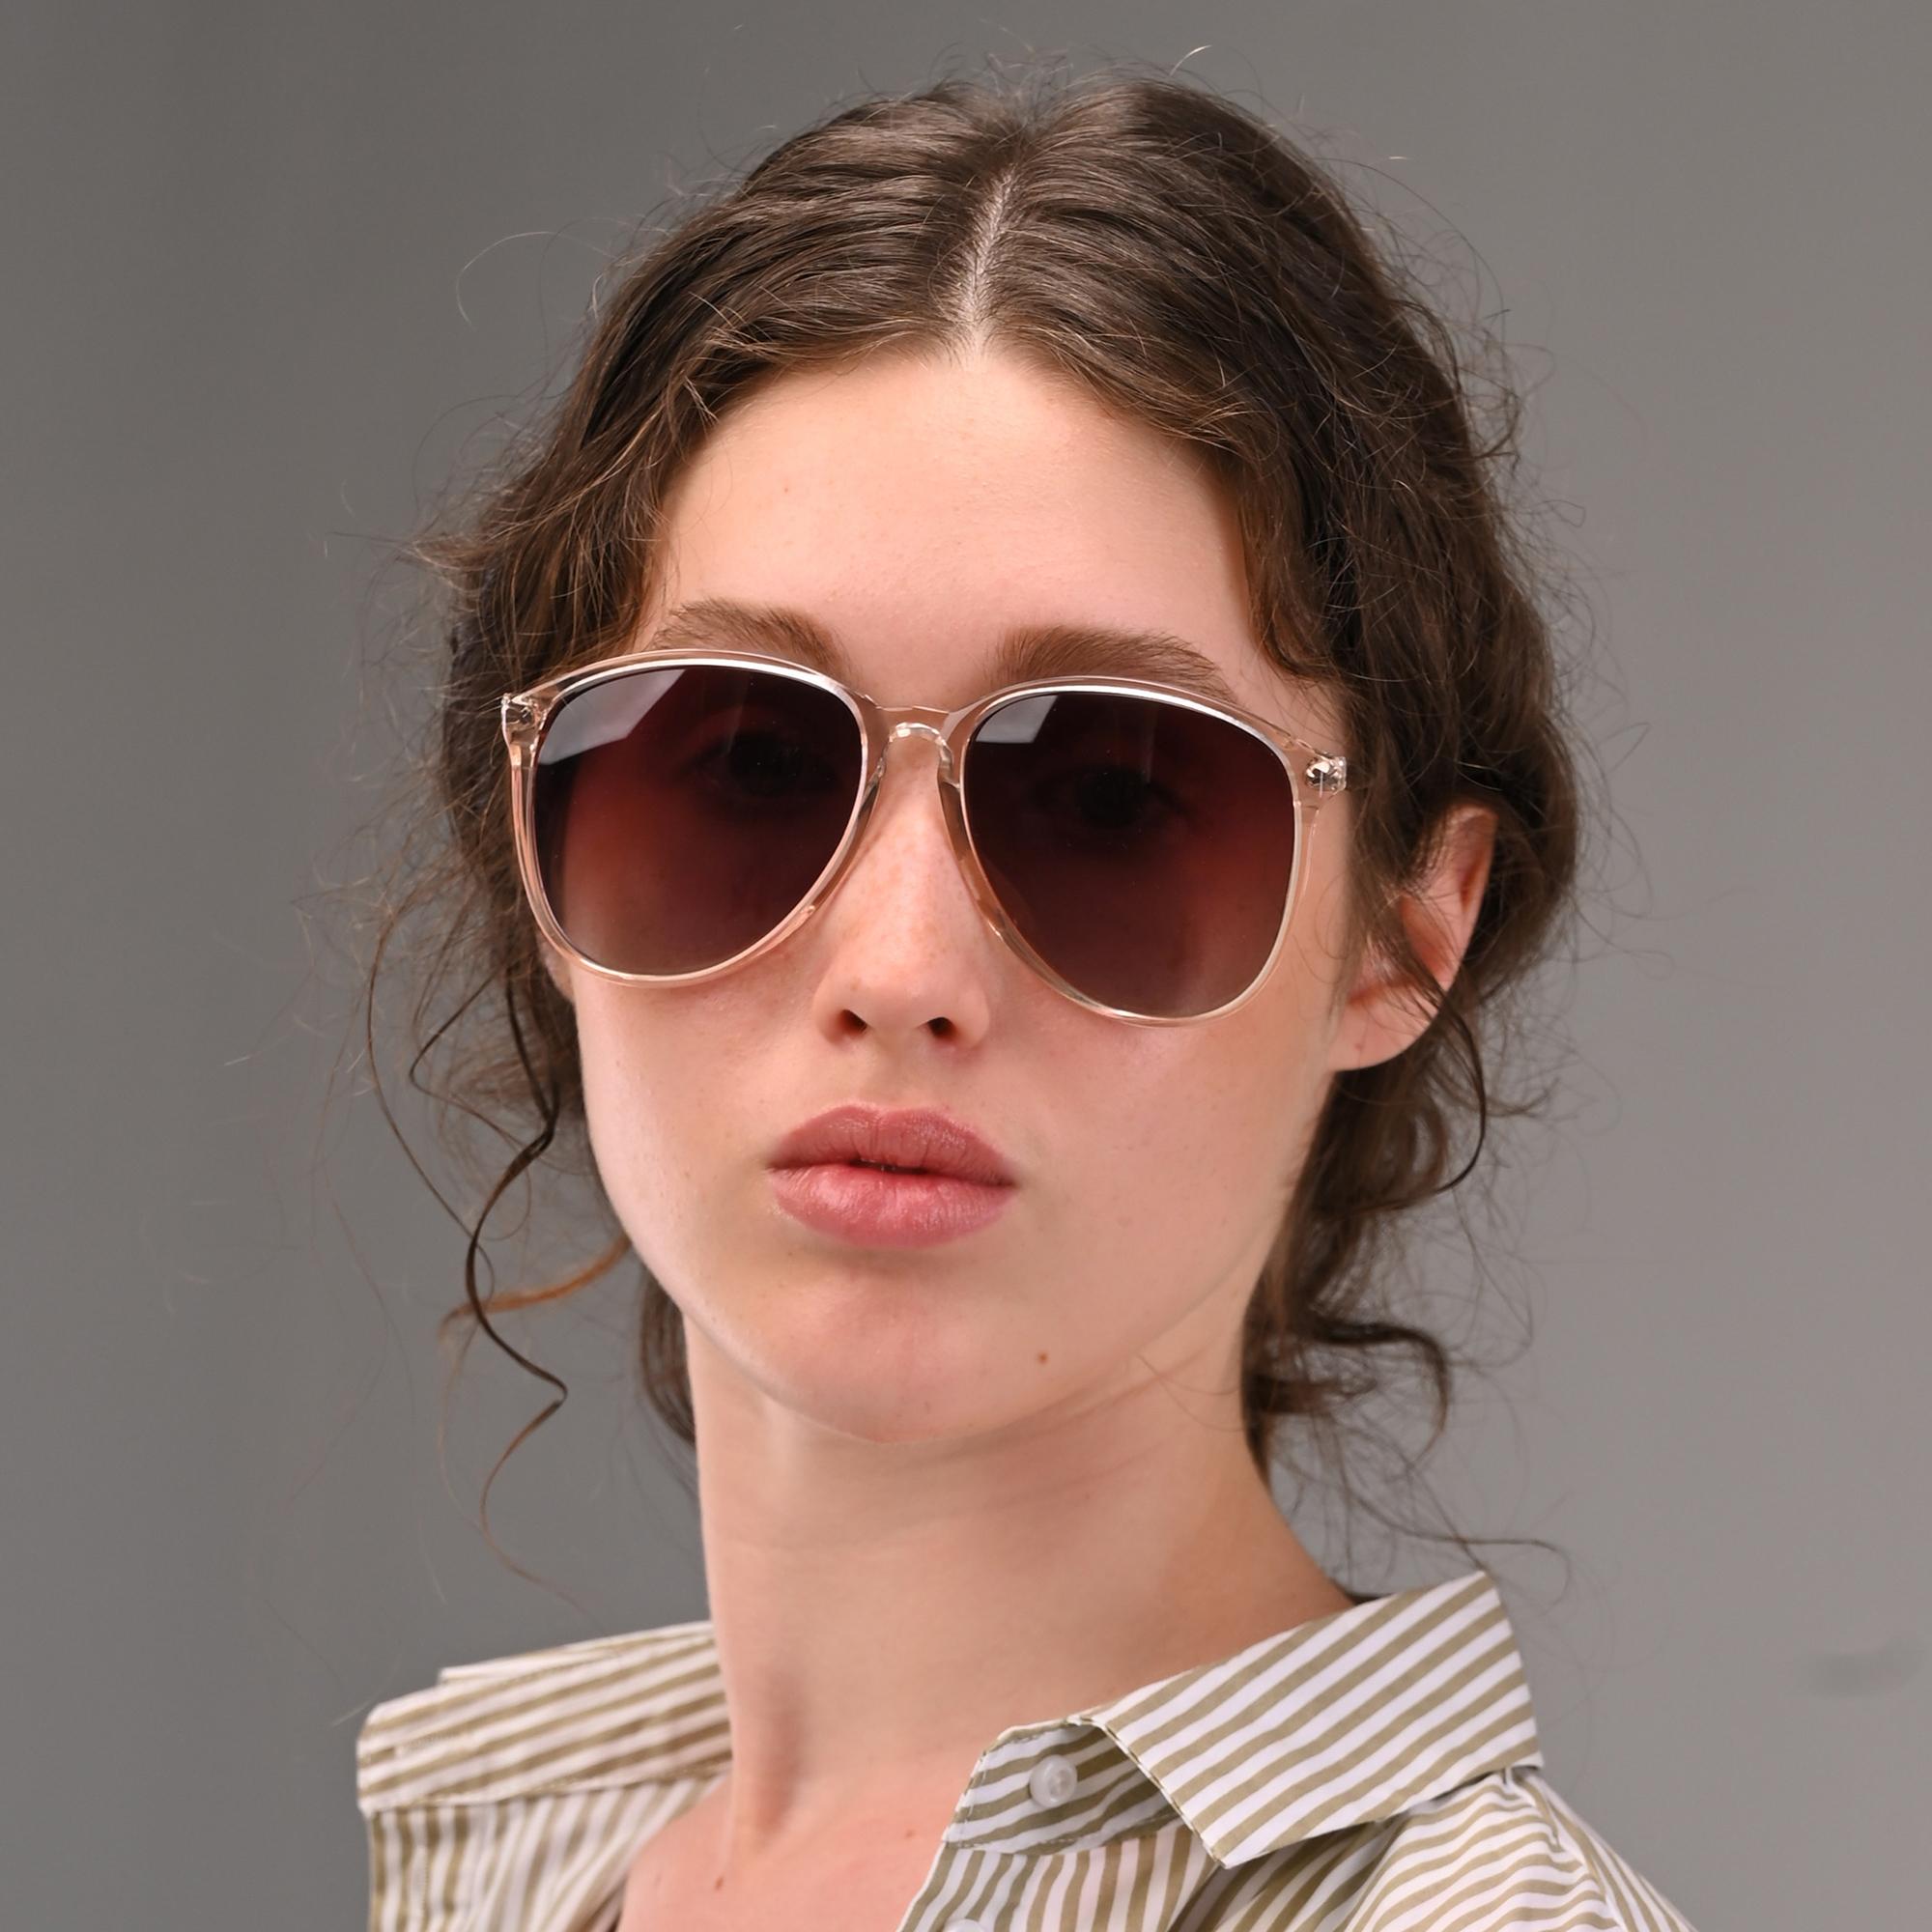 Argos vintage sunglasses, France 70s For Sale 4